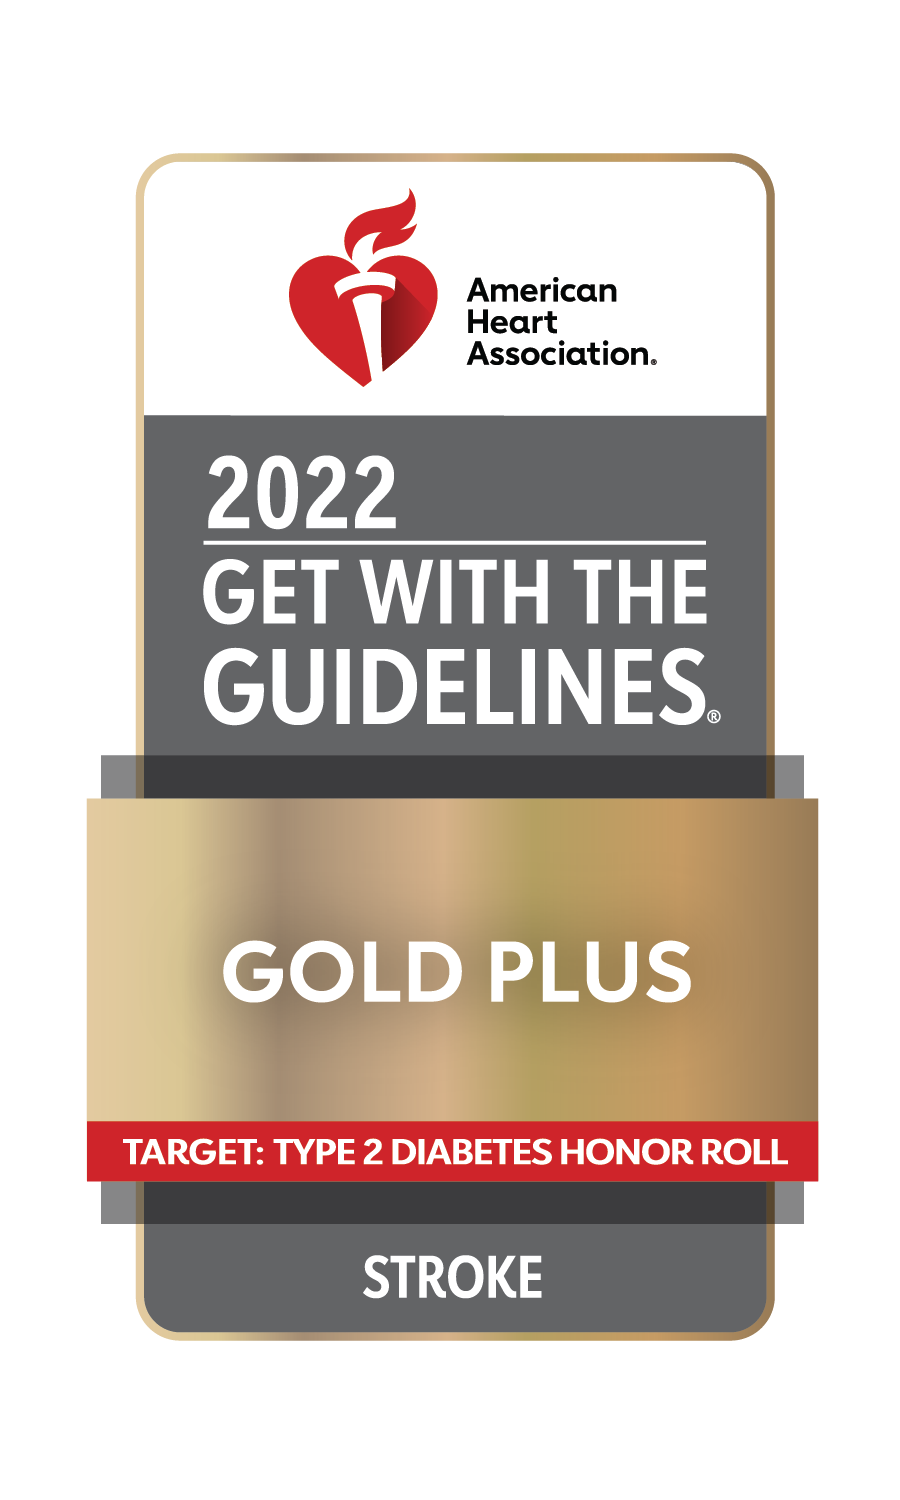 2022 GWTG_Gold Plus_Target Type 2 Diabetes Honor Roll_Stroke